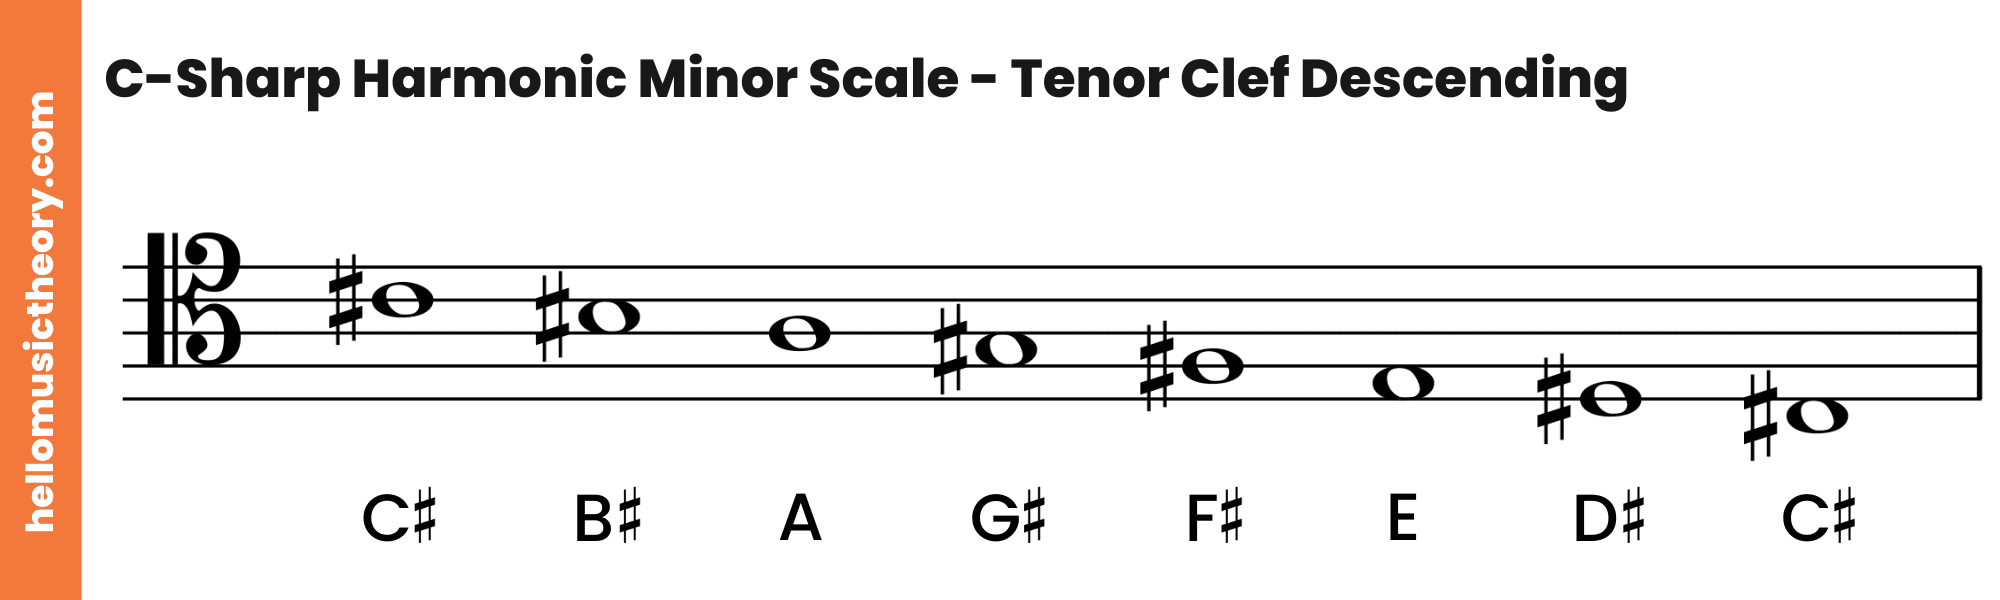 C-Sharp Harmonic Minor Scale Tenor Clef Descending